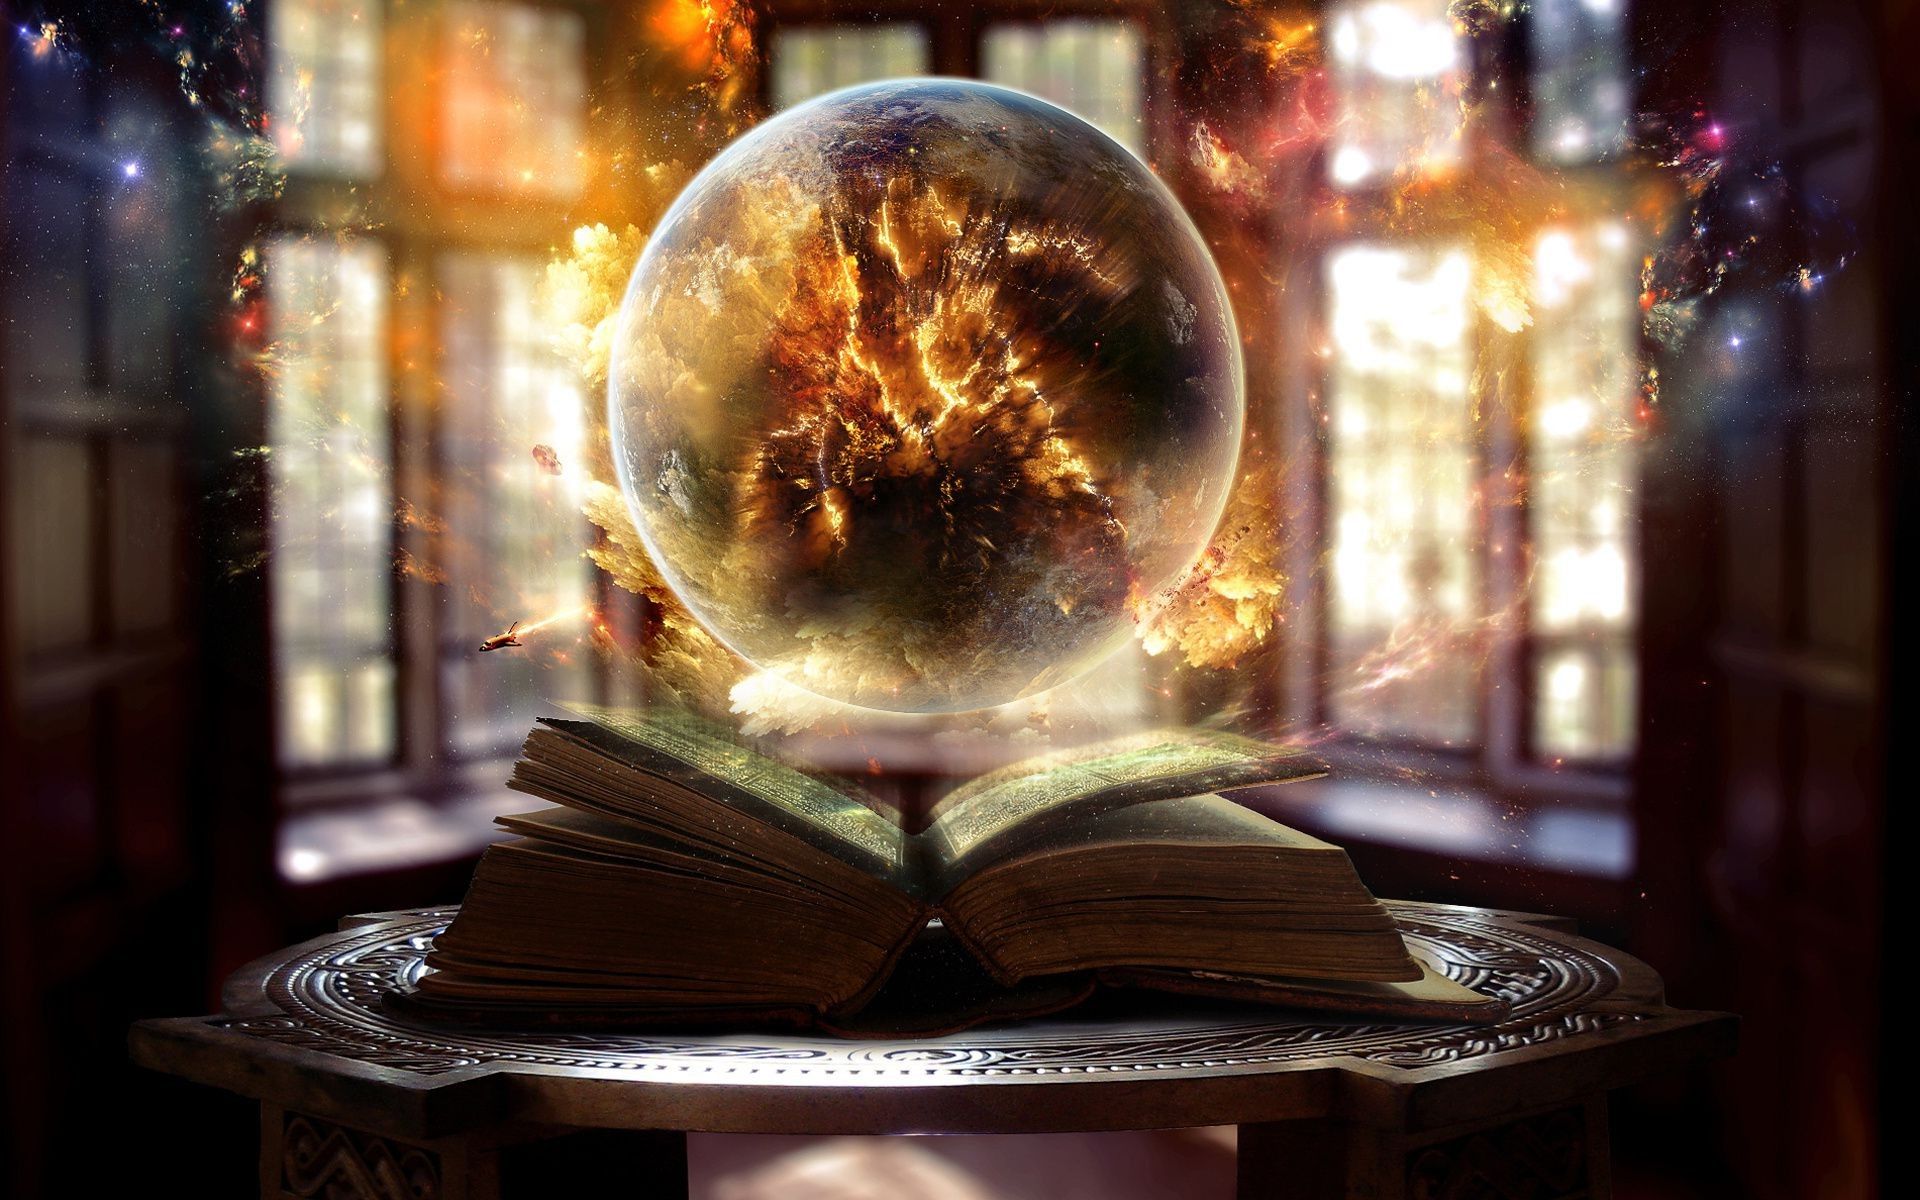 Magic fire sphere ball sparks book